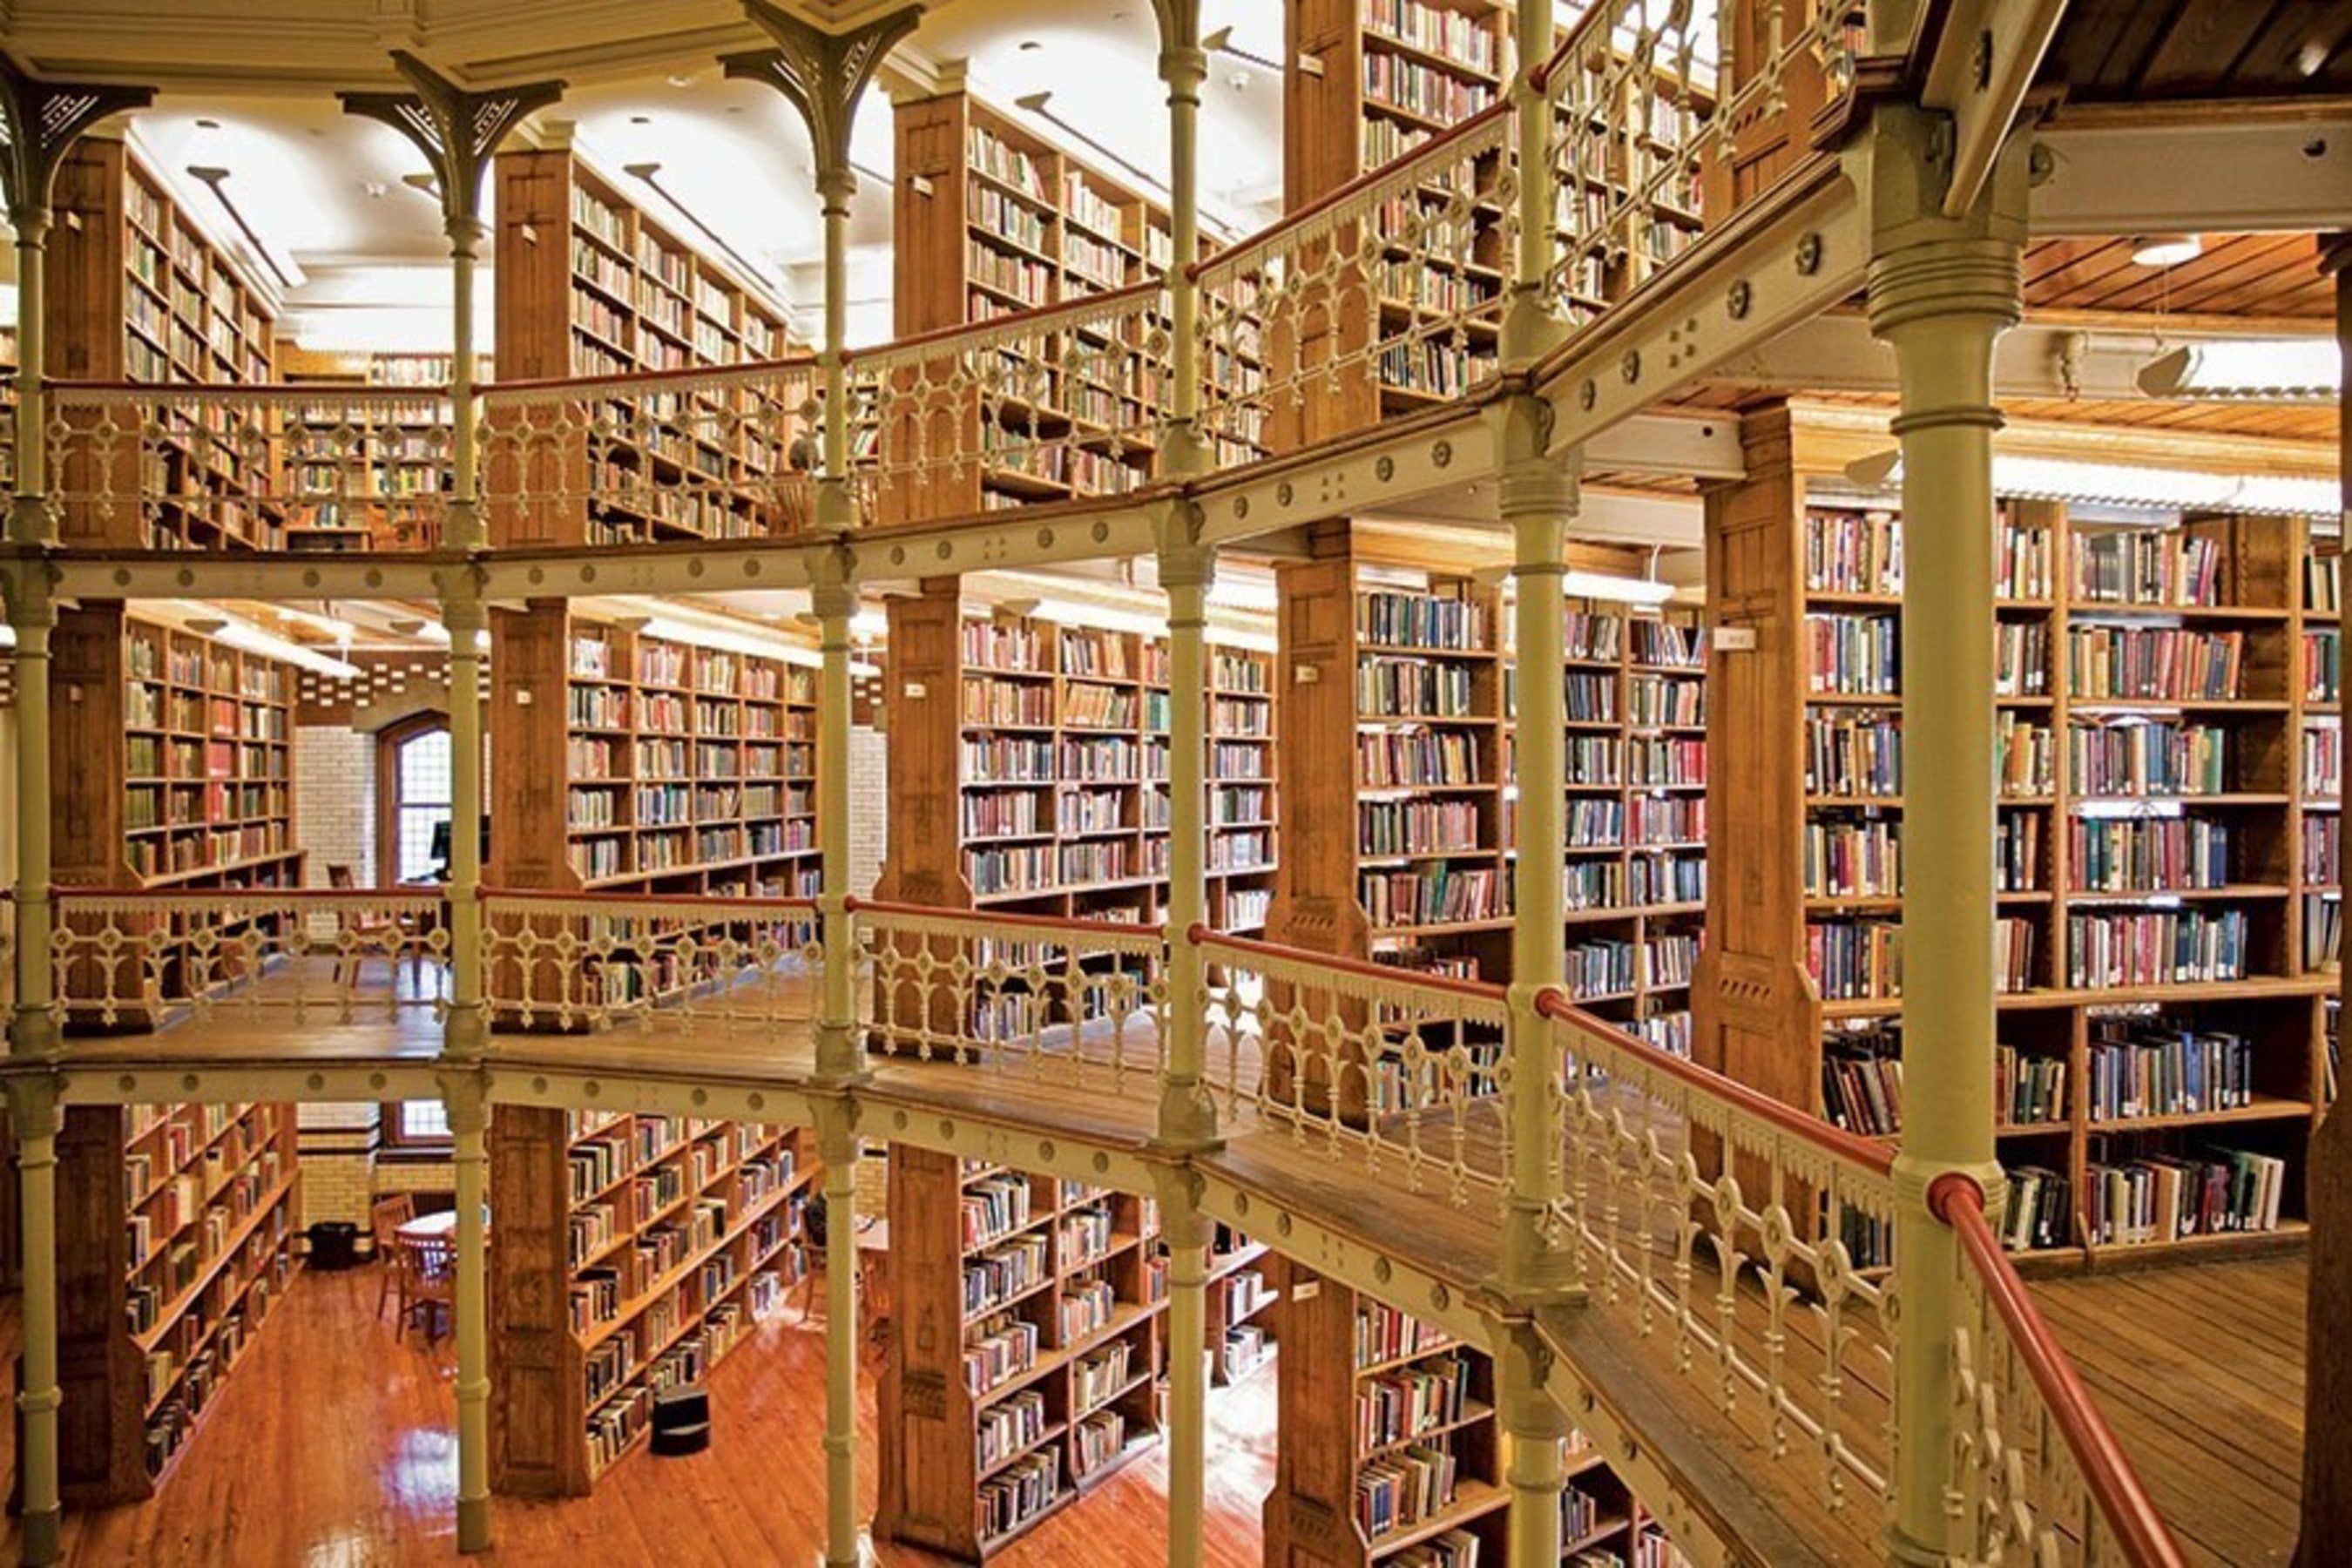 G library. Библиотека Чикагского университета. Пенсильванский университет библиотека. Библиотека университета Чикаго. Библиотека «the Angel Library» в Киото.